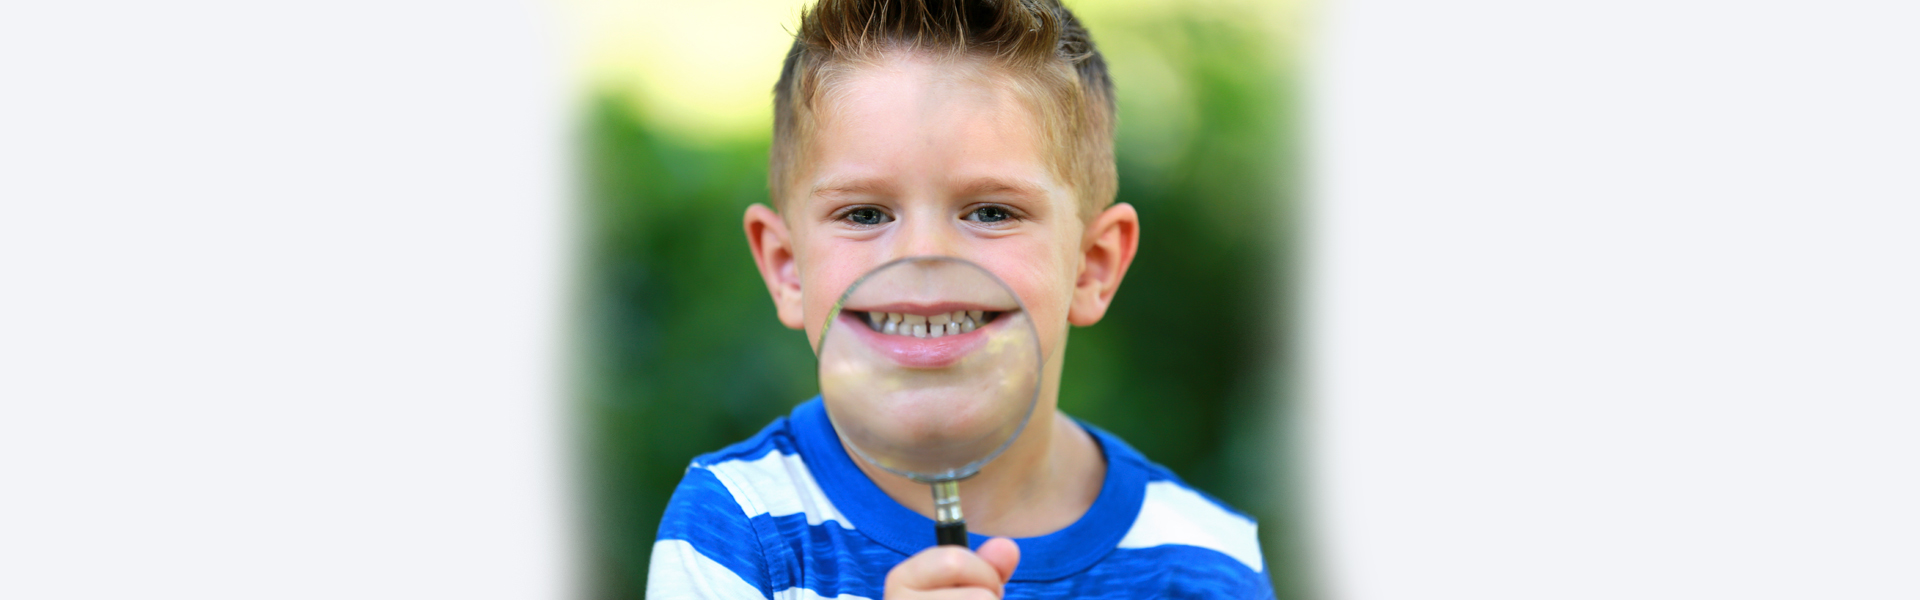 The Benefits Of Dental Sealants For Children